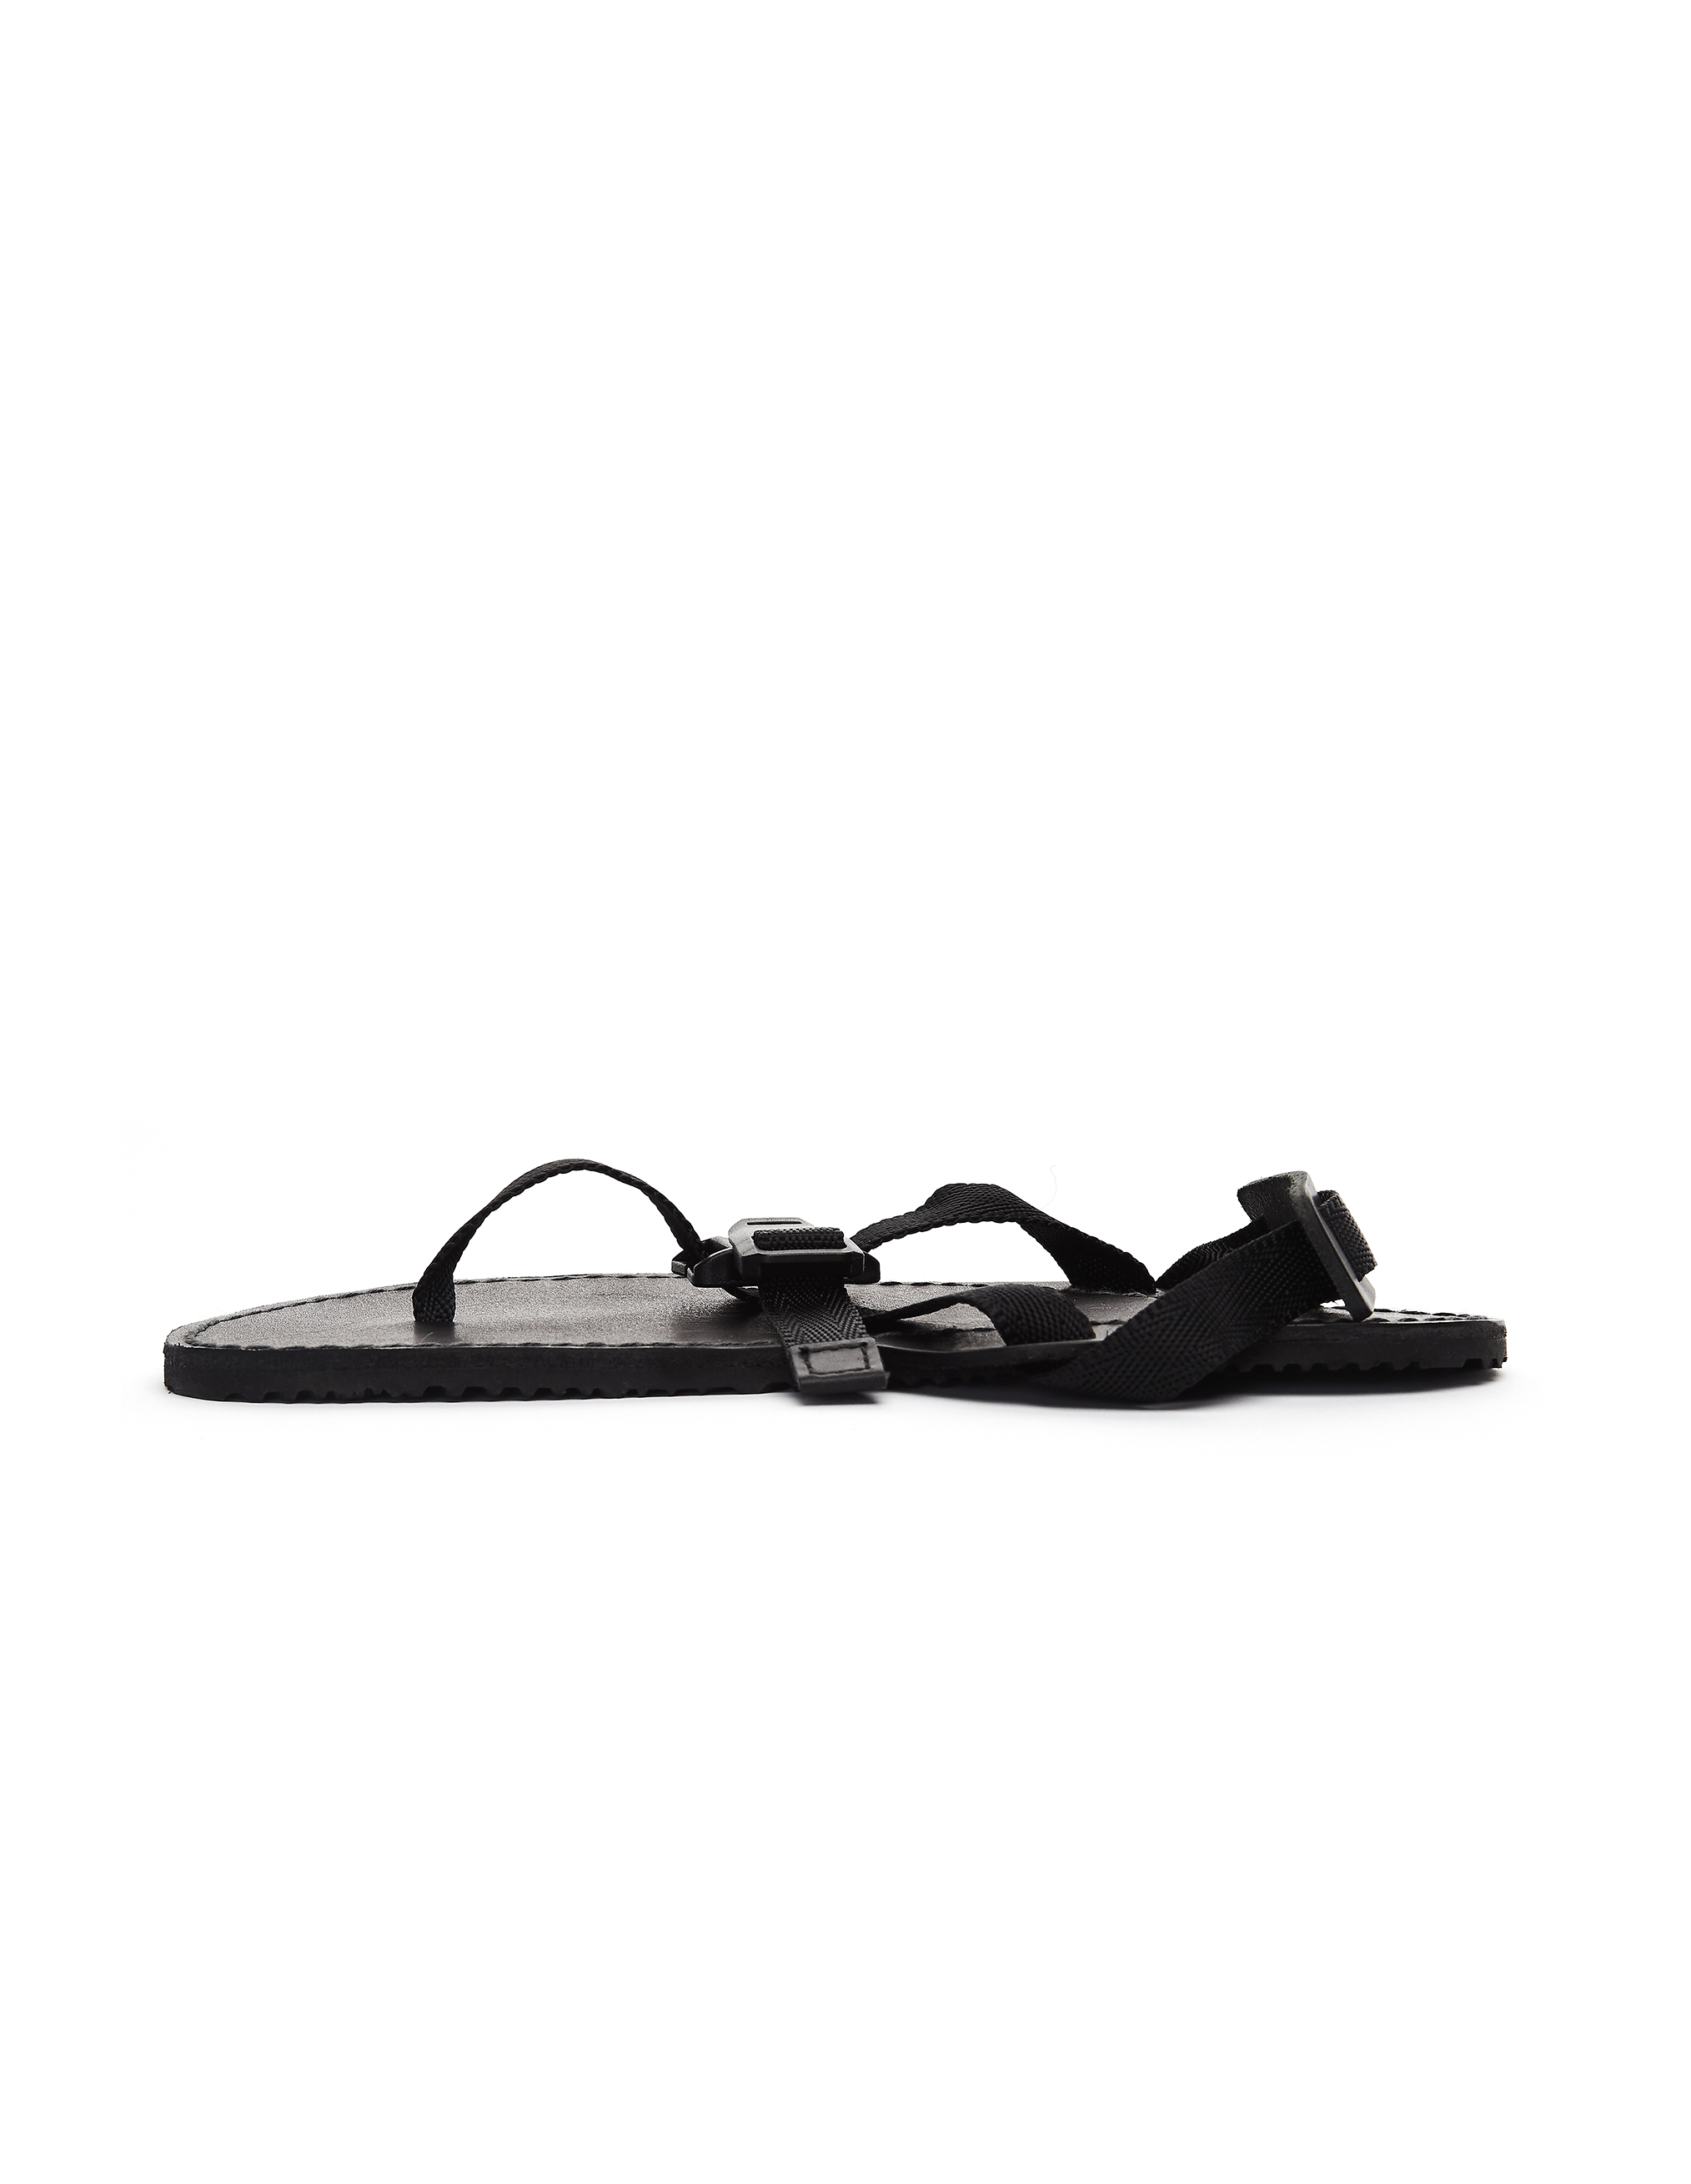 Buy Hender Scheme men devise strap black leather sandal for $173